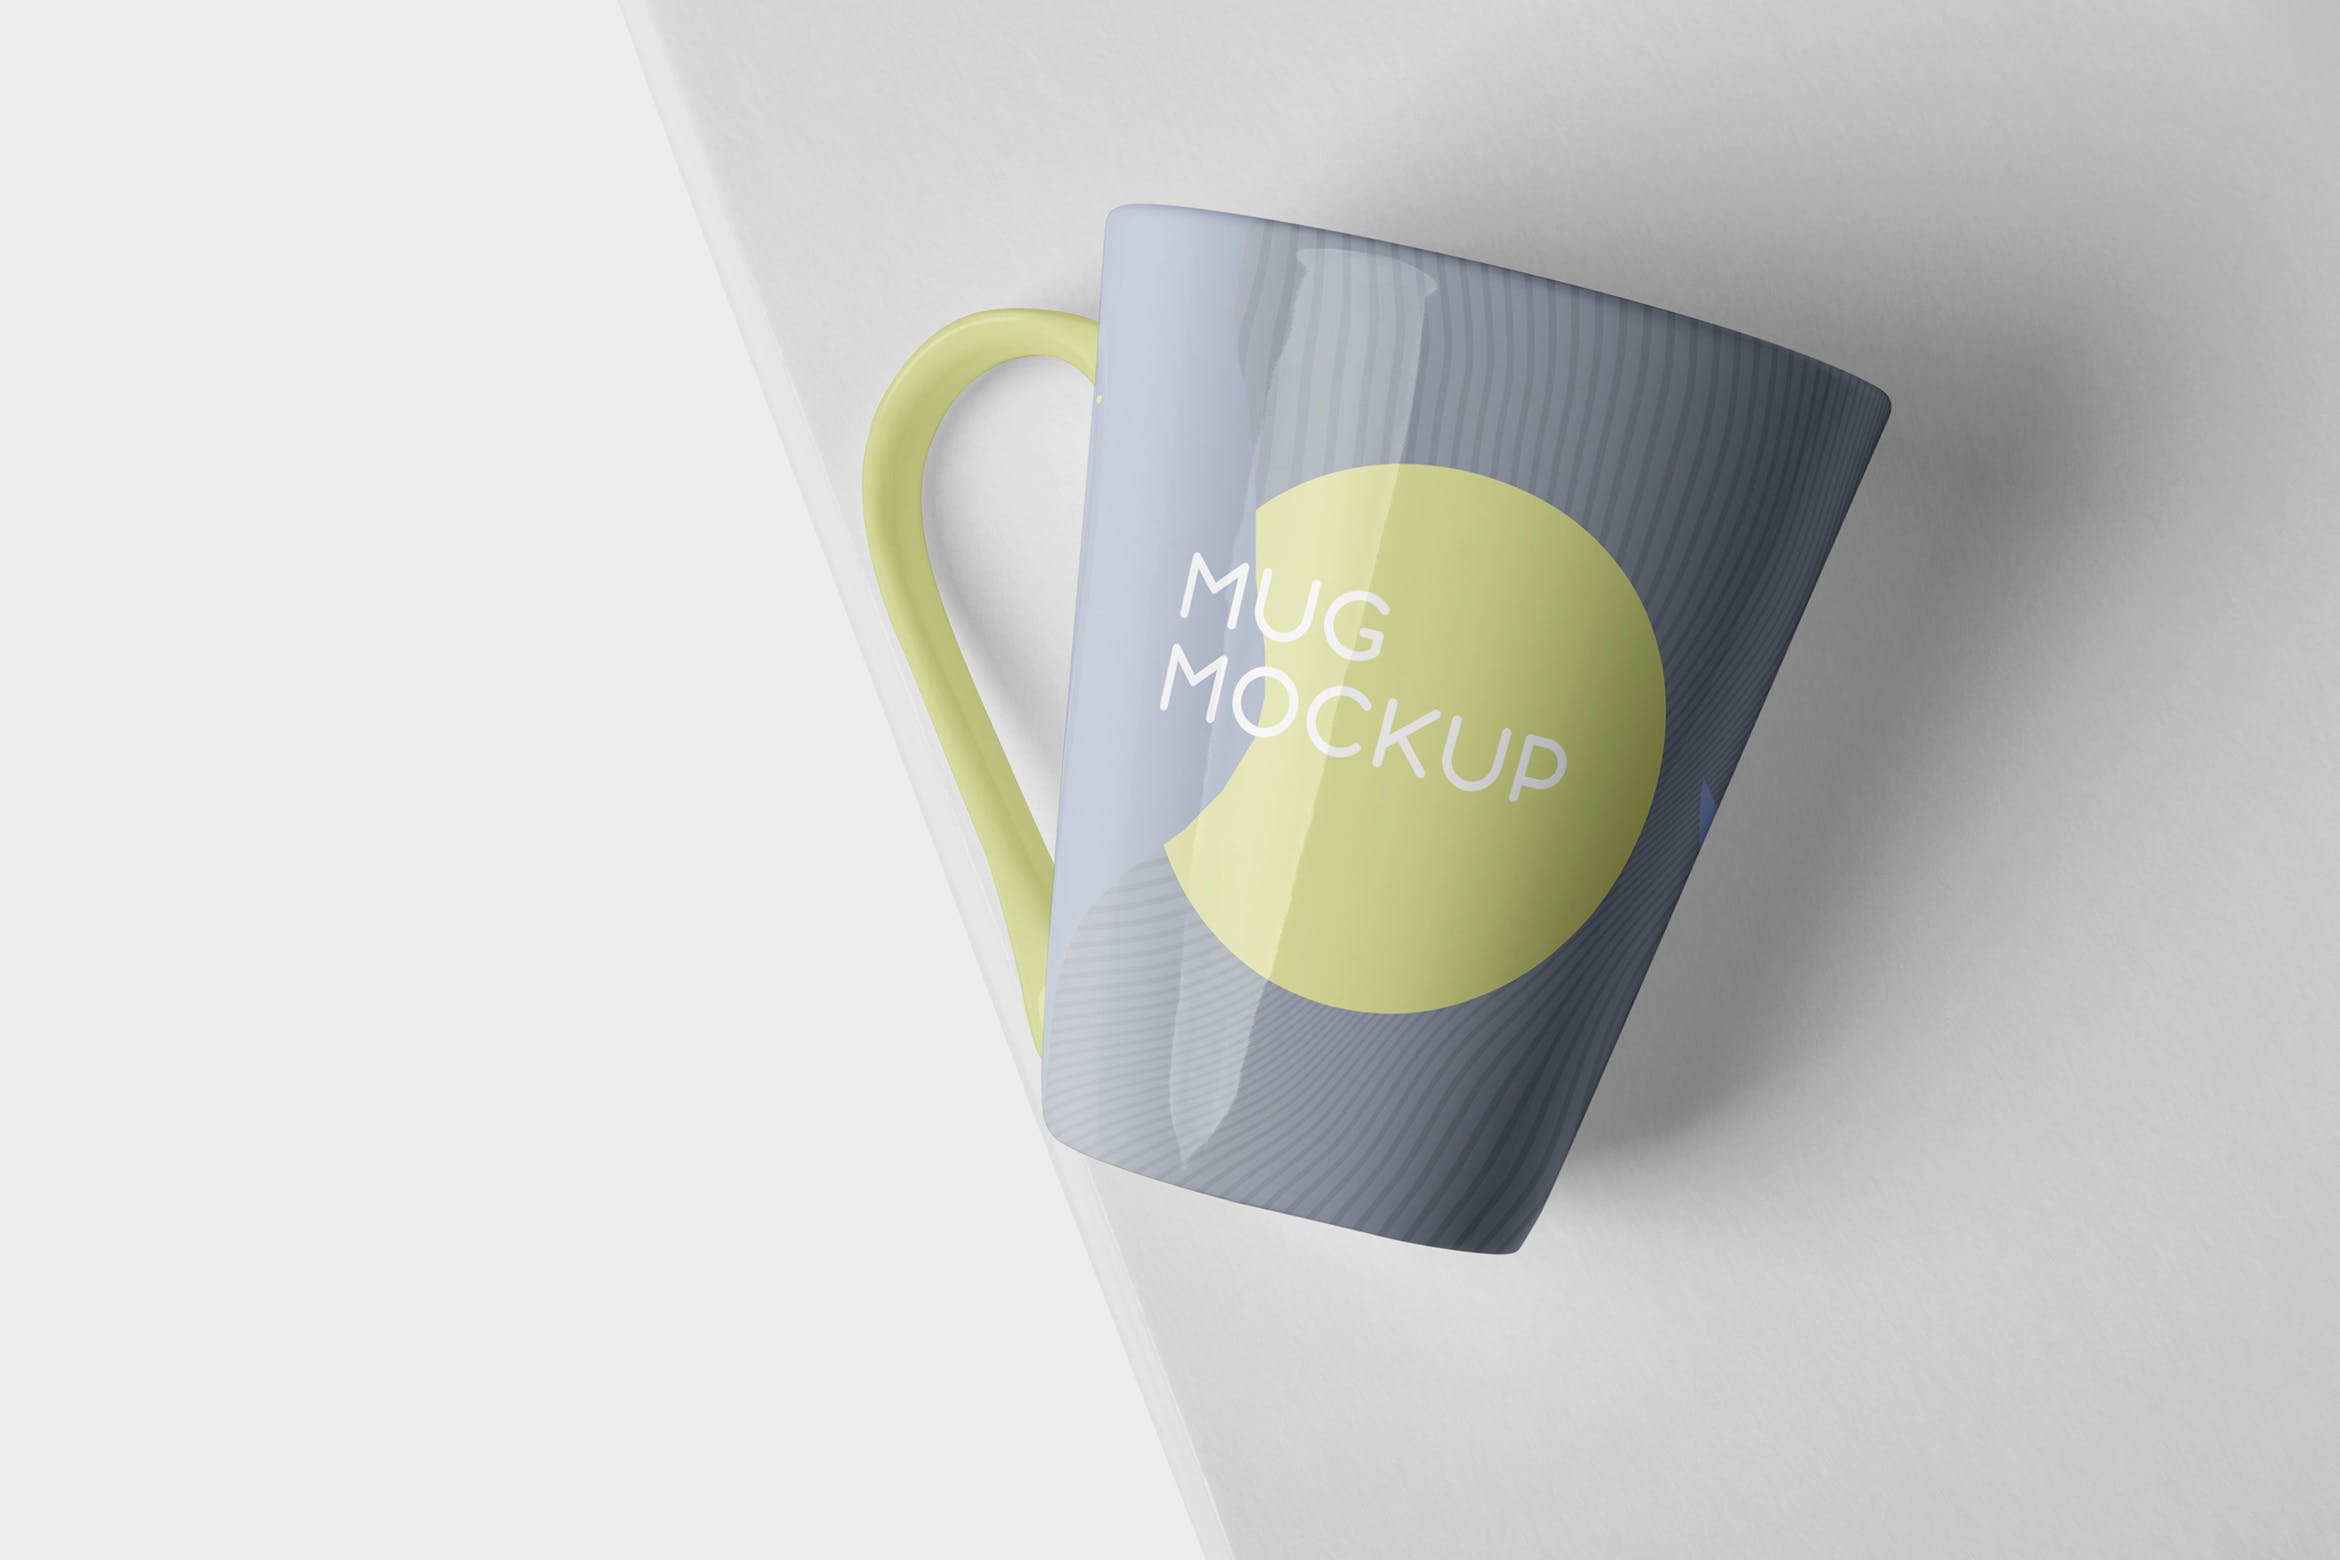 锥形马克杯图案设计16图库精选 Mug Mockup – Cone Shaped插图